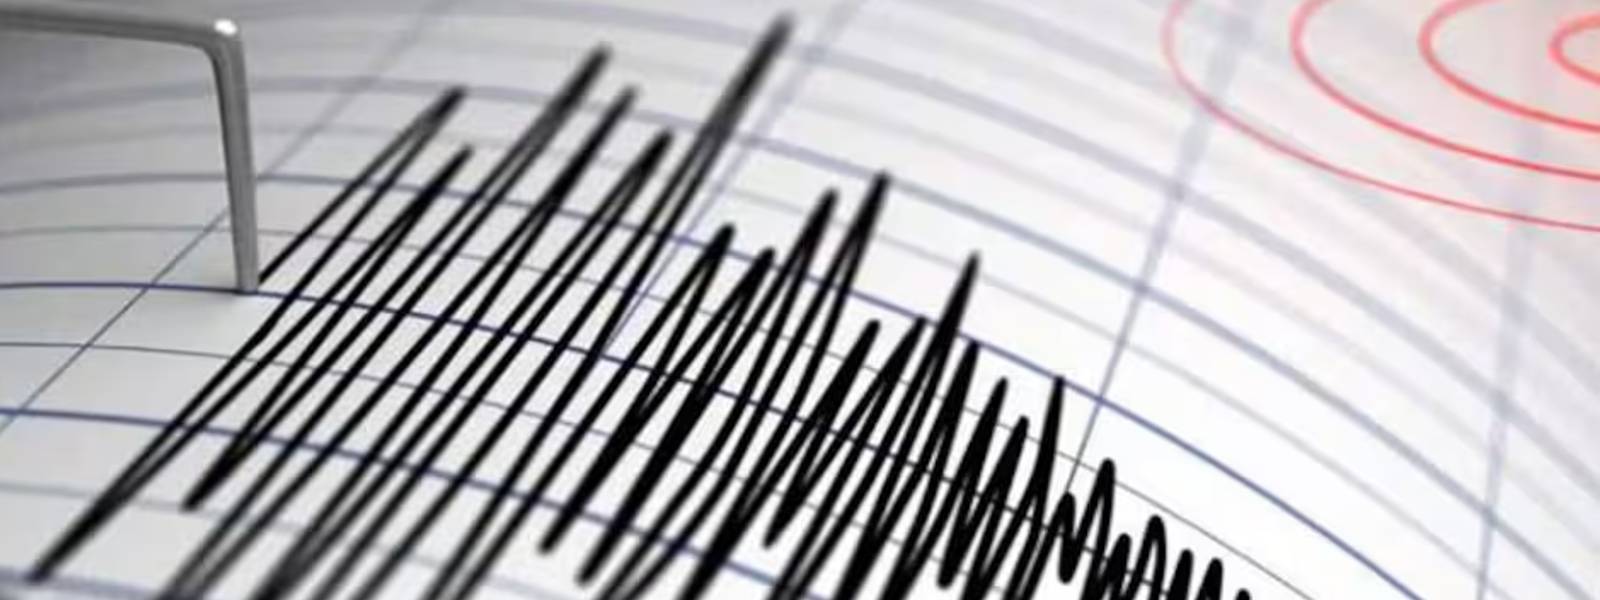 Minor tremor recorded in Sellakataragama